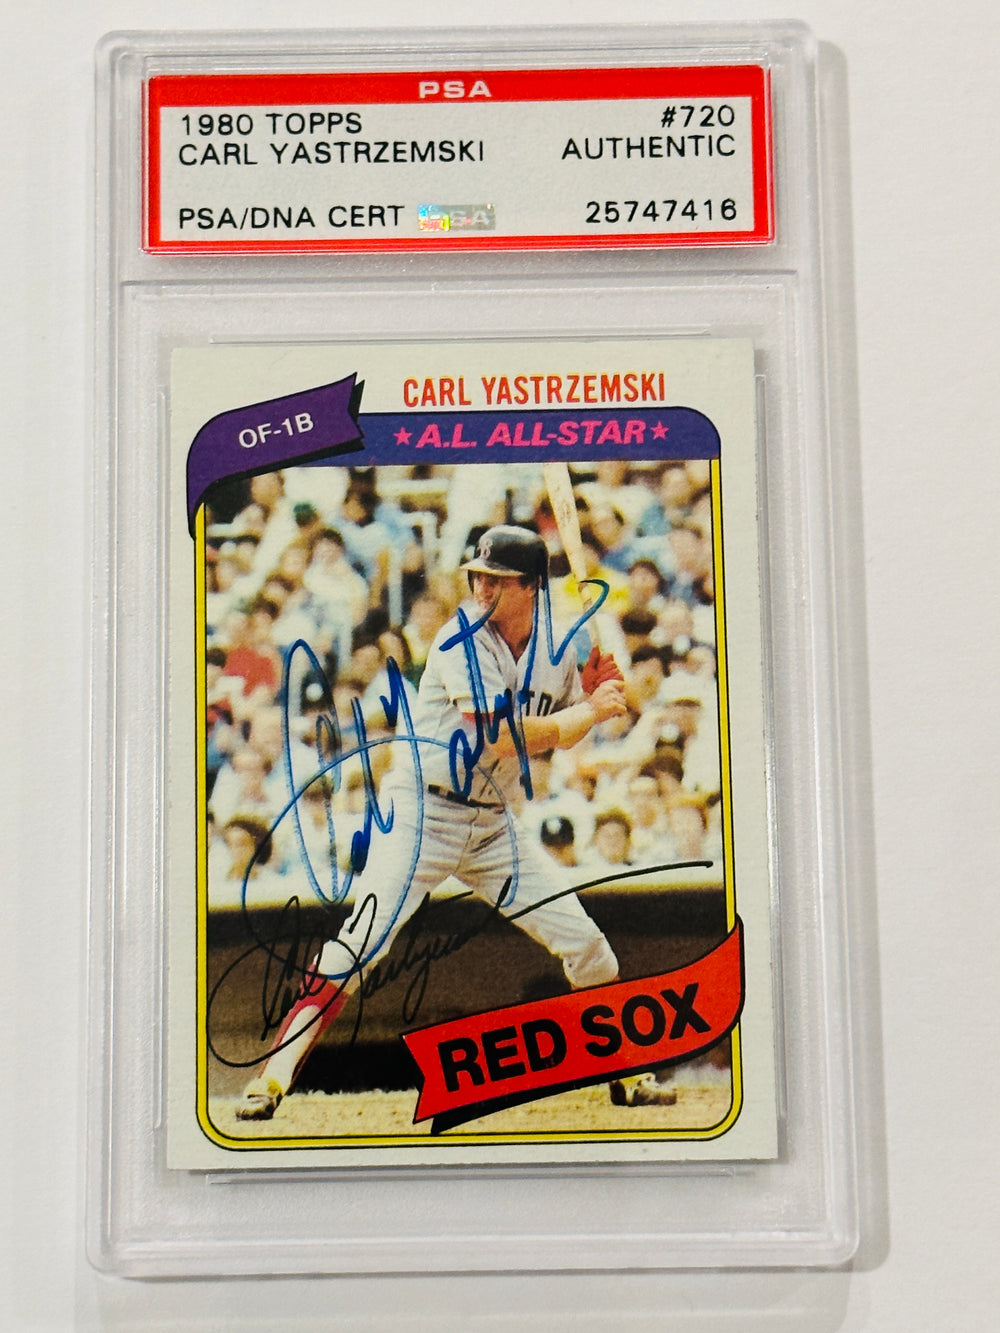 Carl Yastrzemski 1980 Topps Signed Red Sox Baseball Card PSA